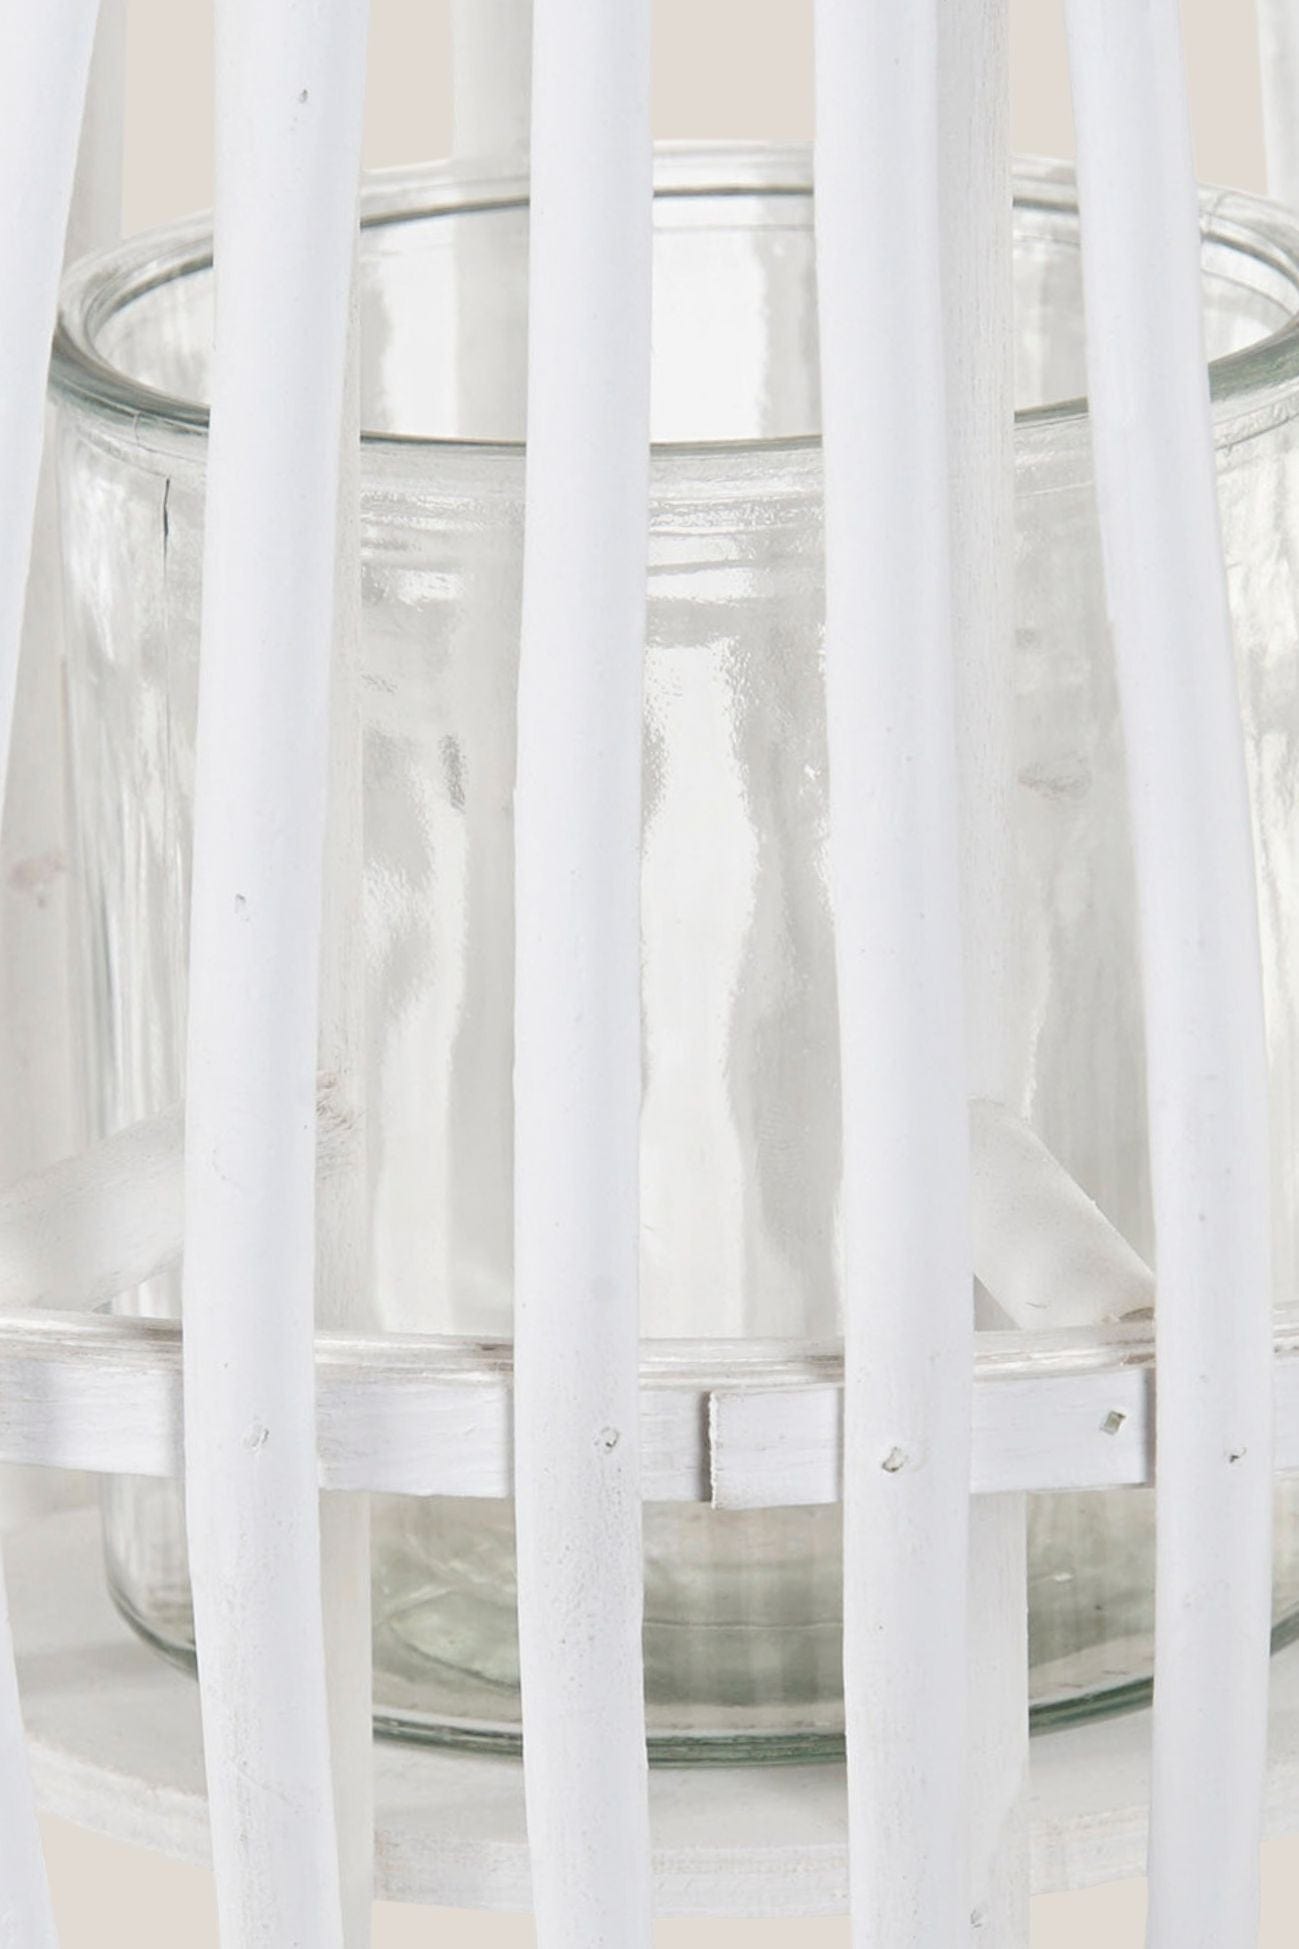 Item International Nahil Nahil - Lanterna bianca in legno e portacandela in vetro | Item International